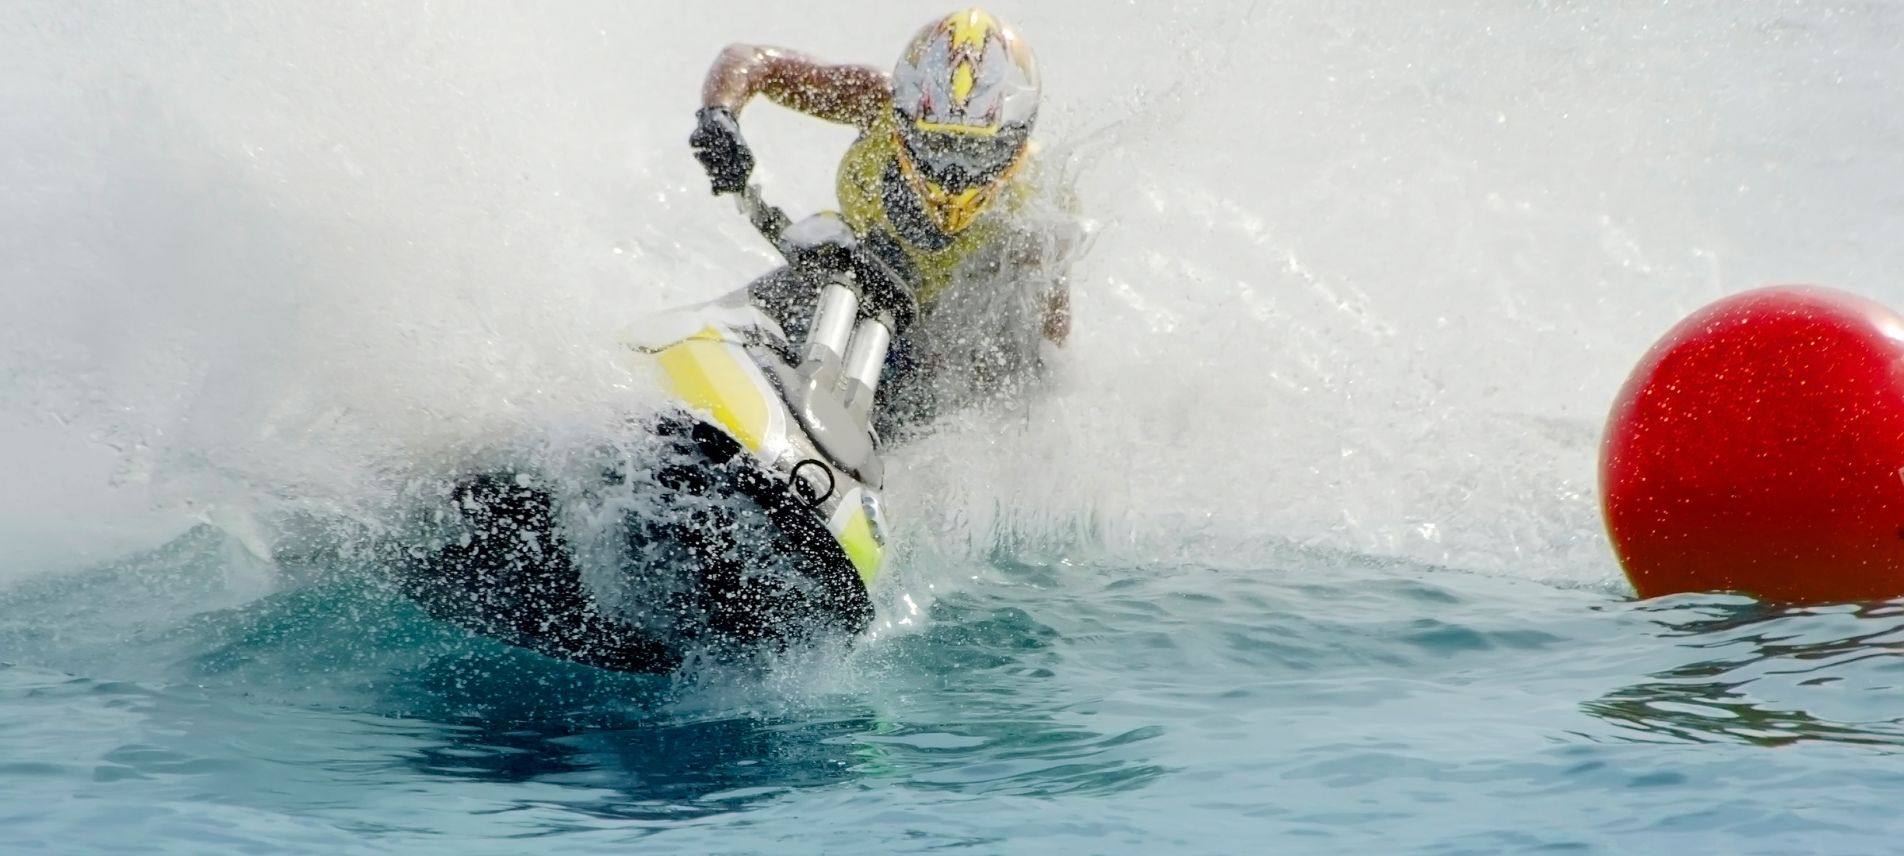 Diferencias entre jetski y moto de agua